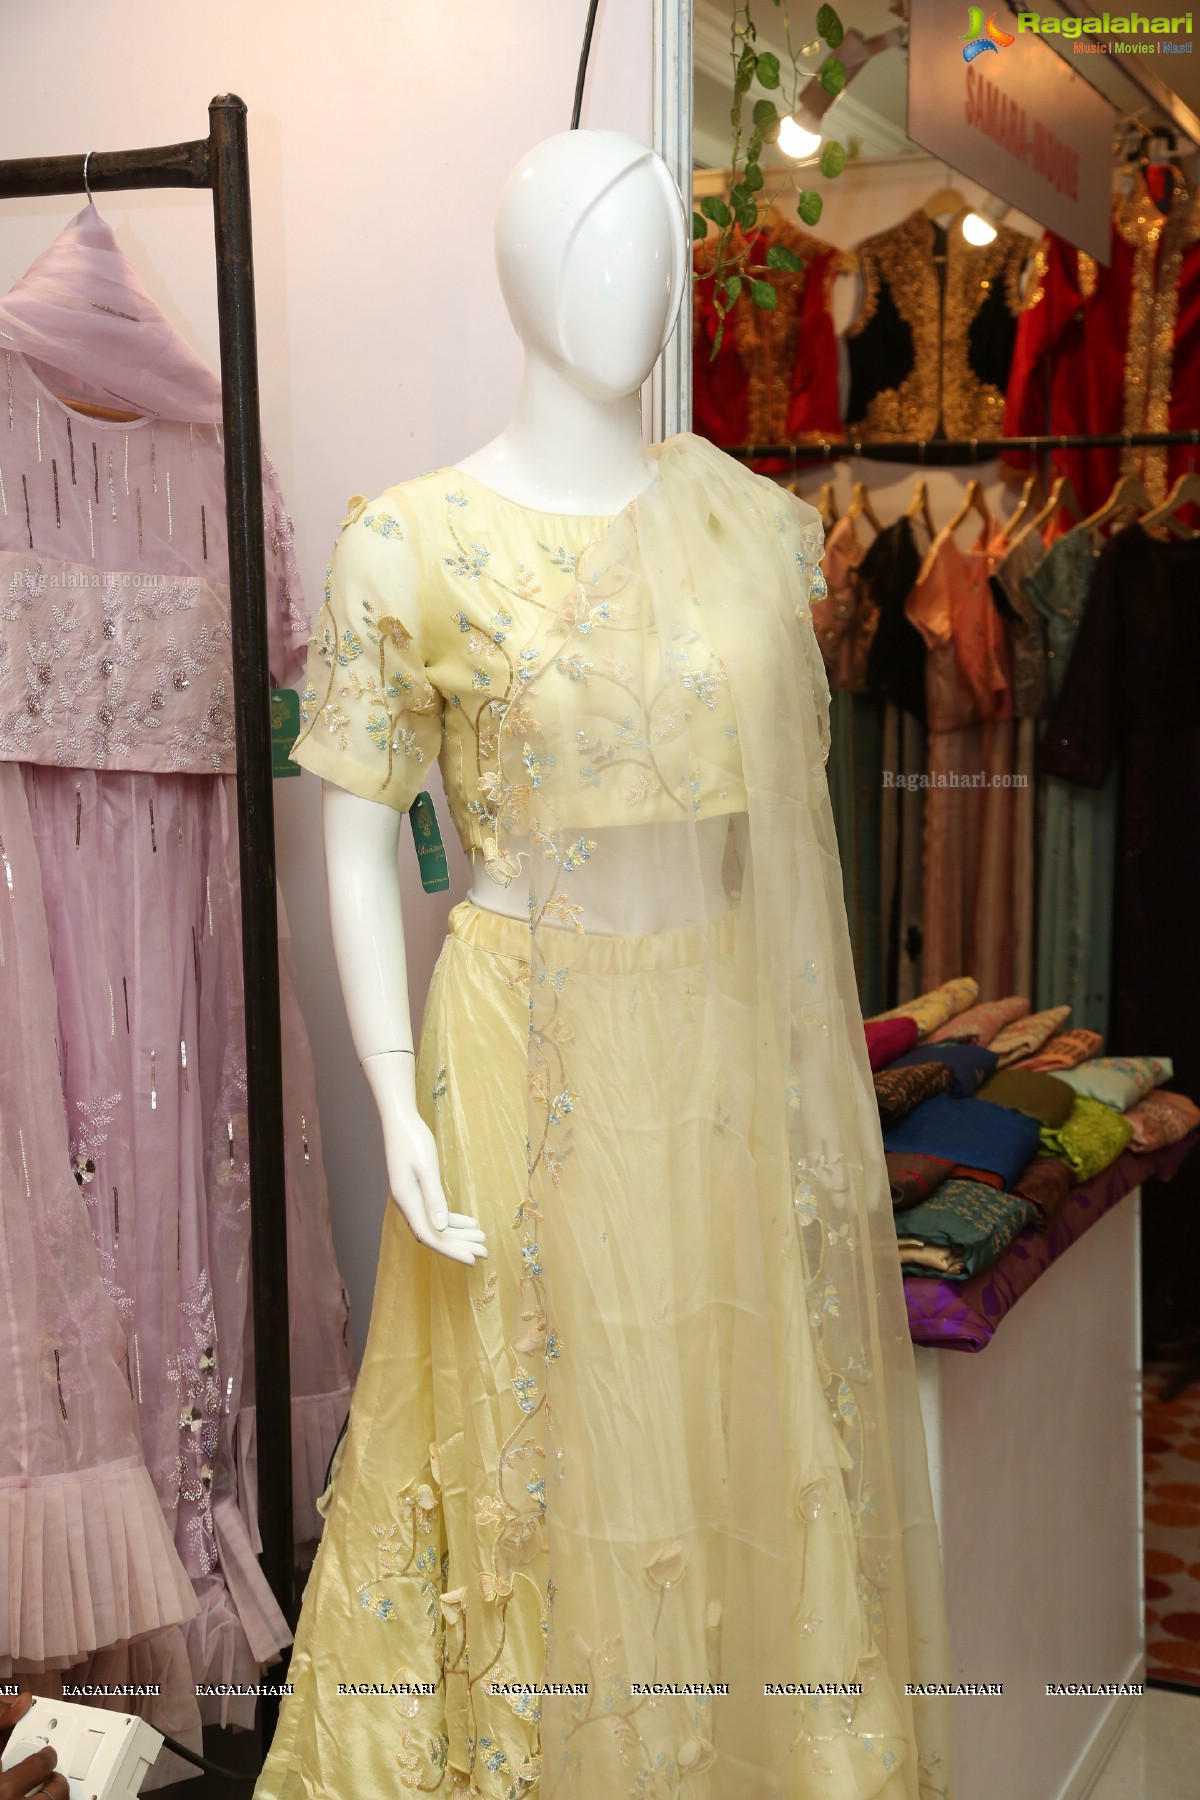 Jhalak Lifestyle & Fashion Exhibition @ Hotel Taj Krishna, Banjara Hills